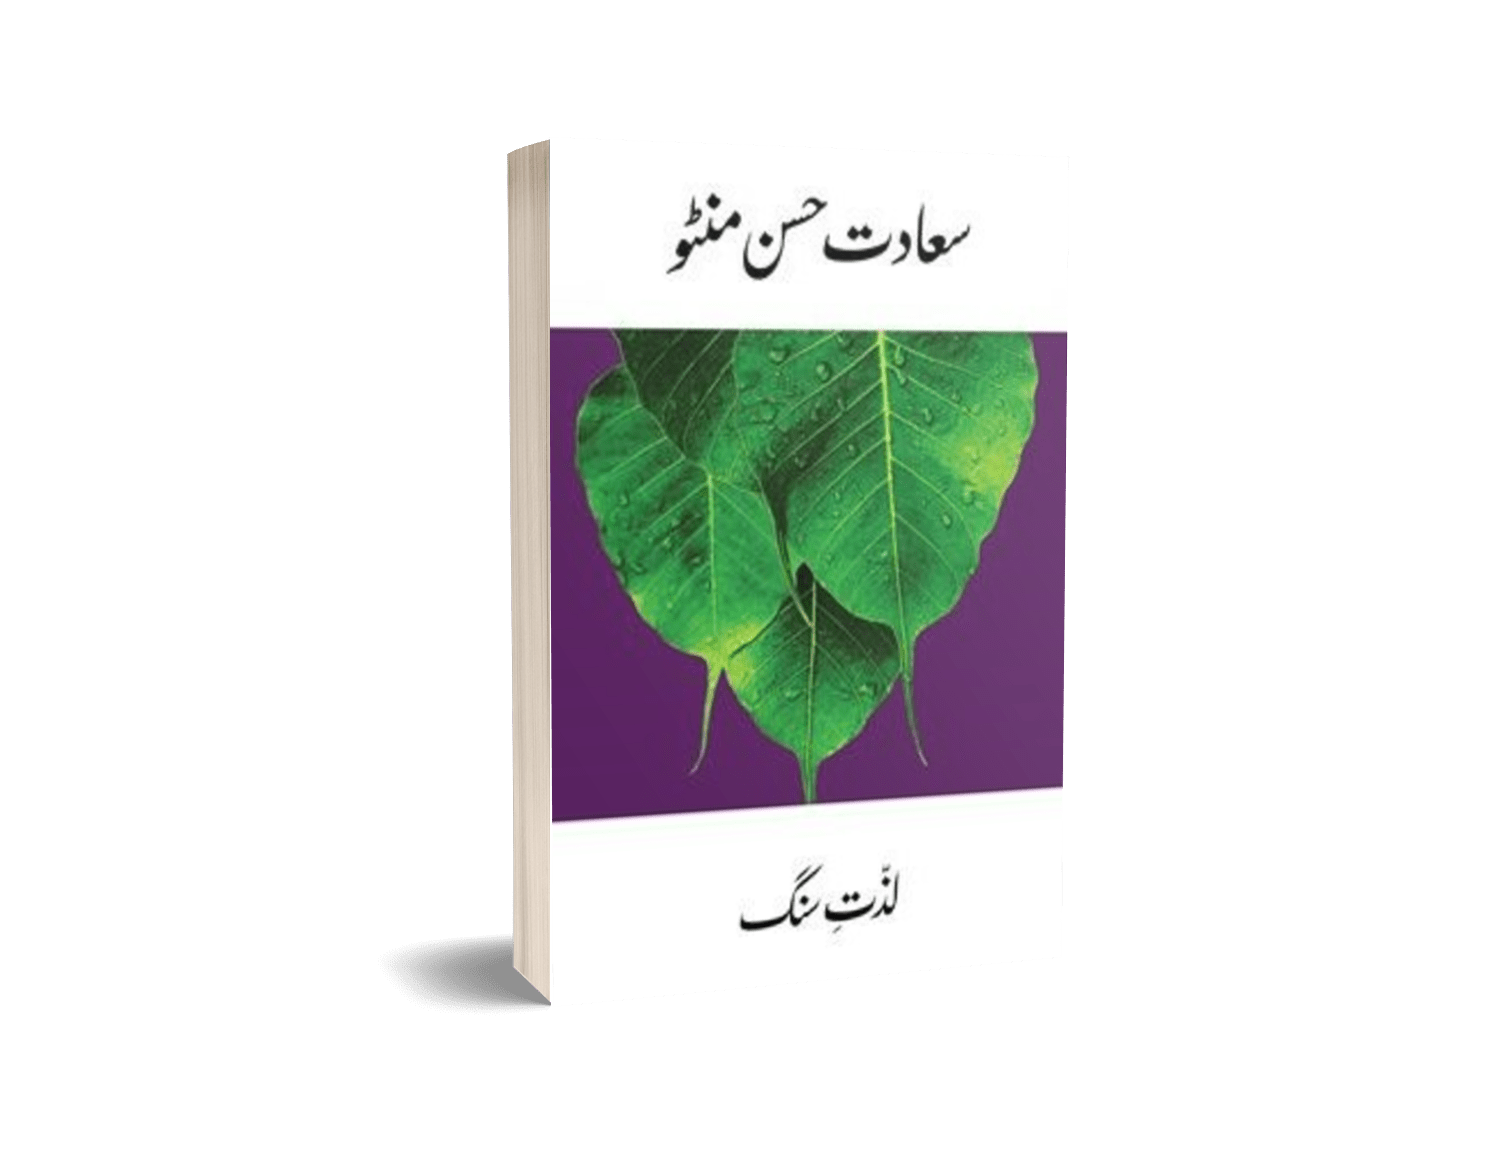 Lazzat-E-Sang Book by Saadat Hasan Manto